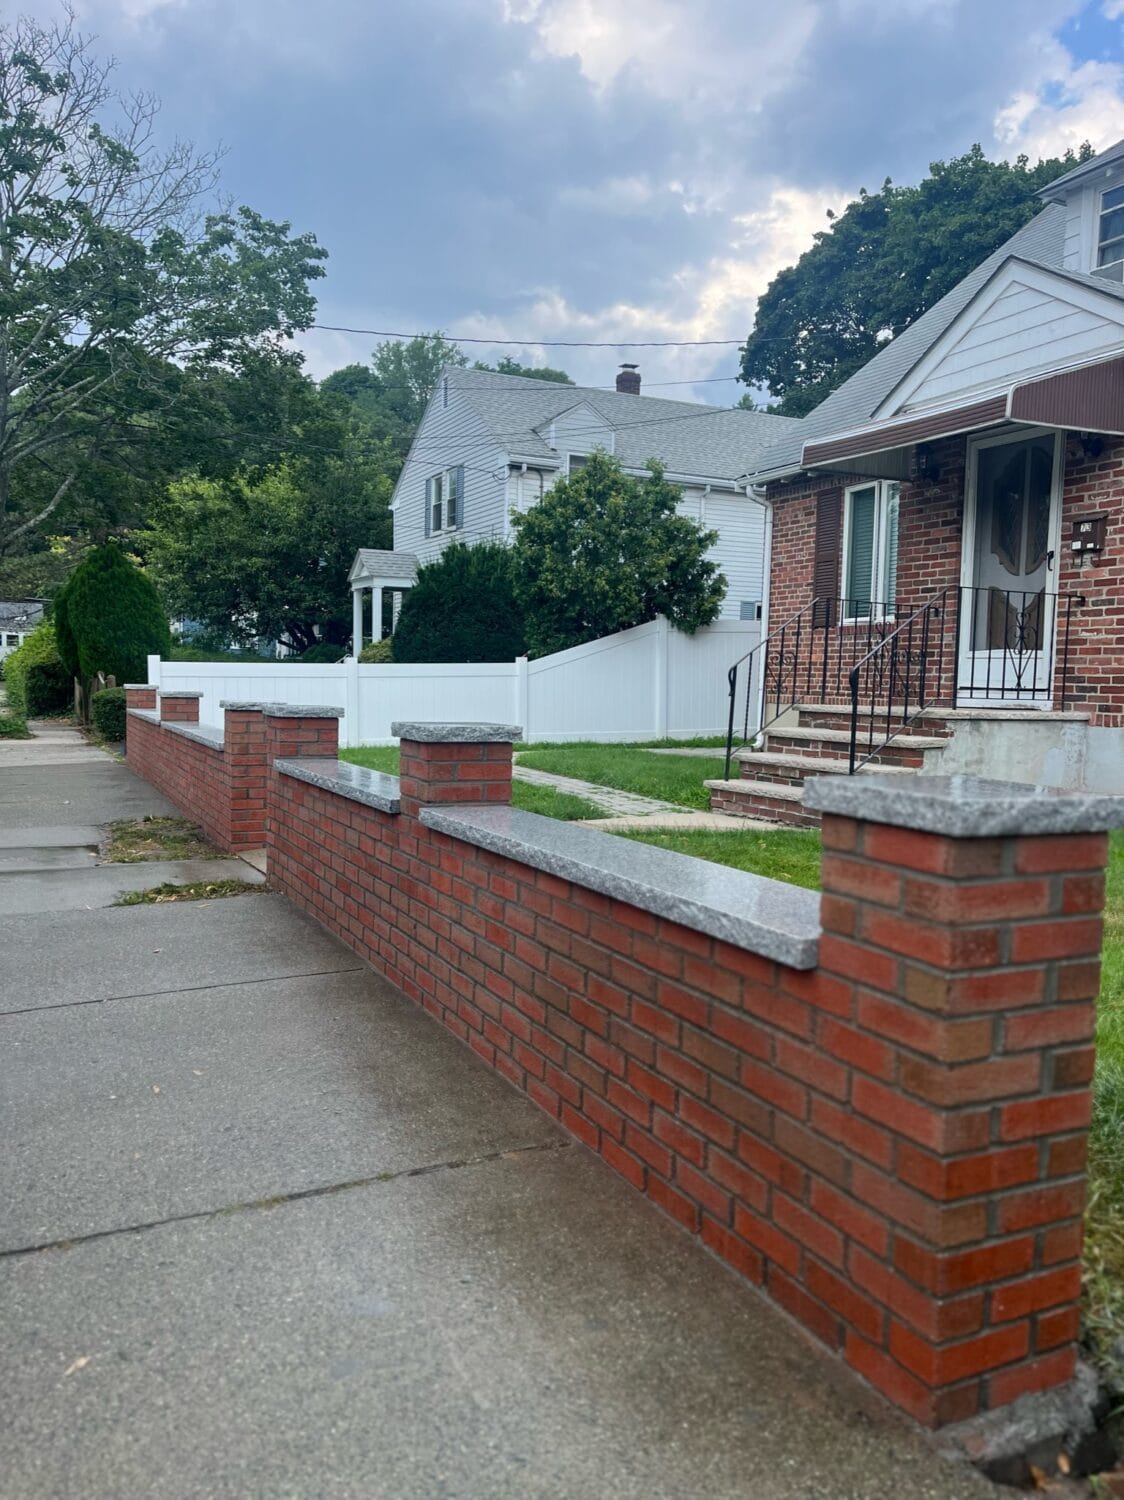 New brick wall separating house and sidewalk